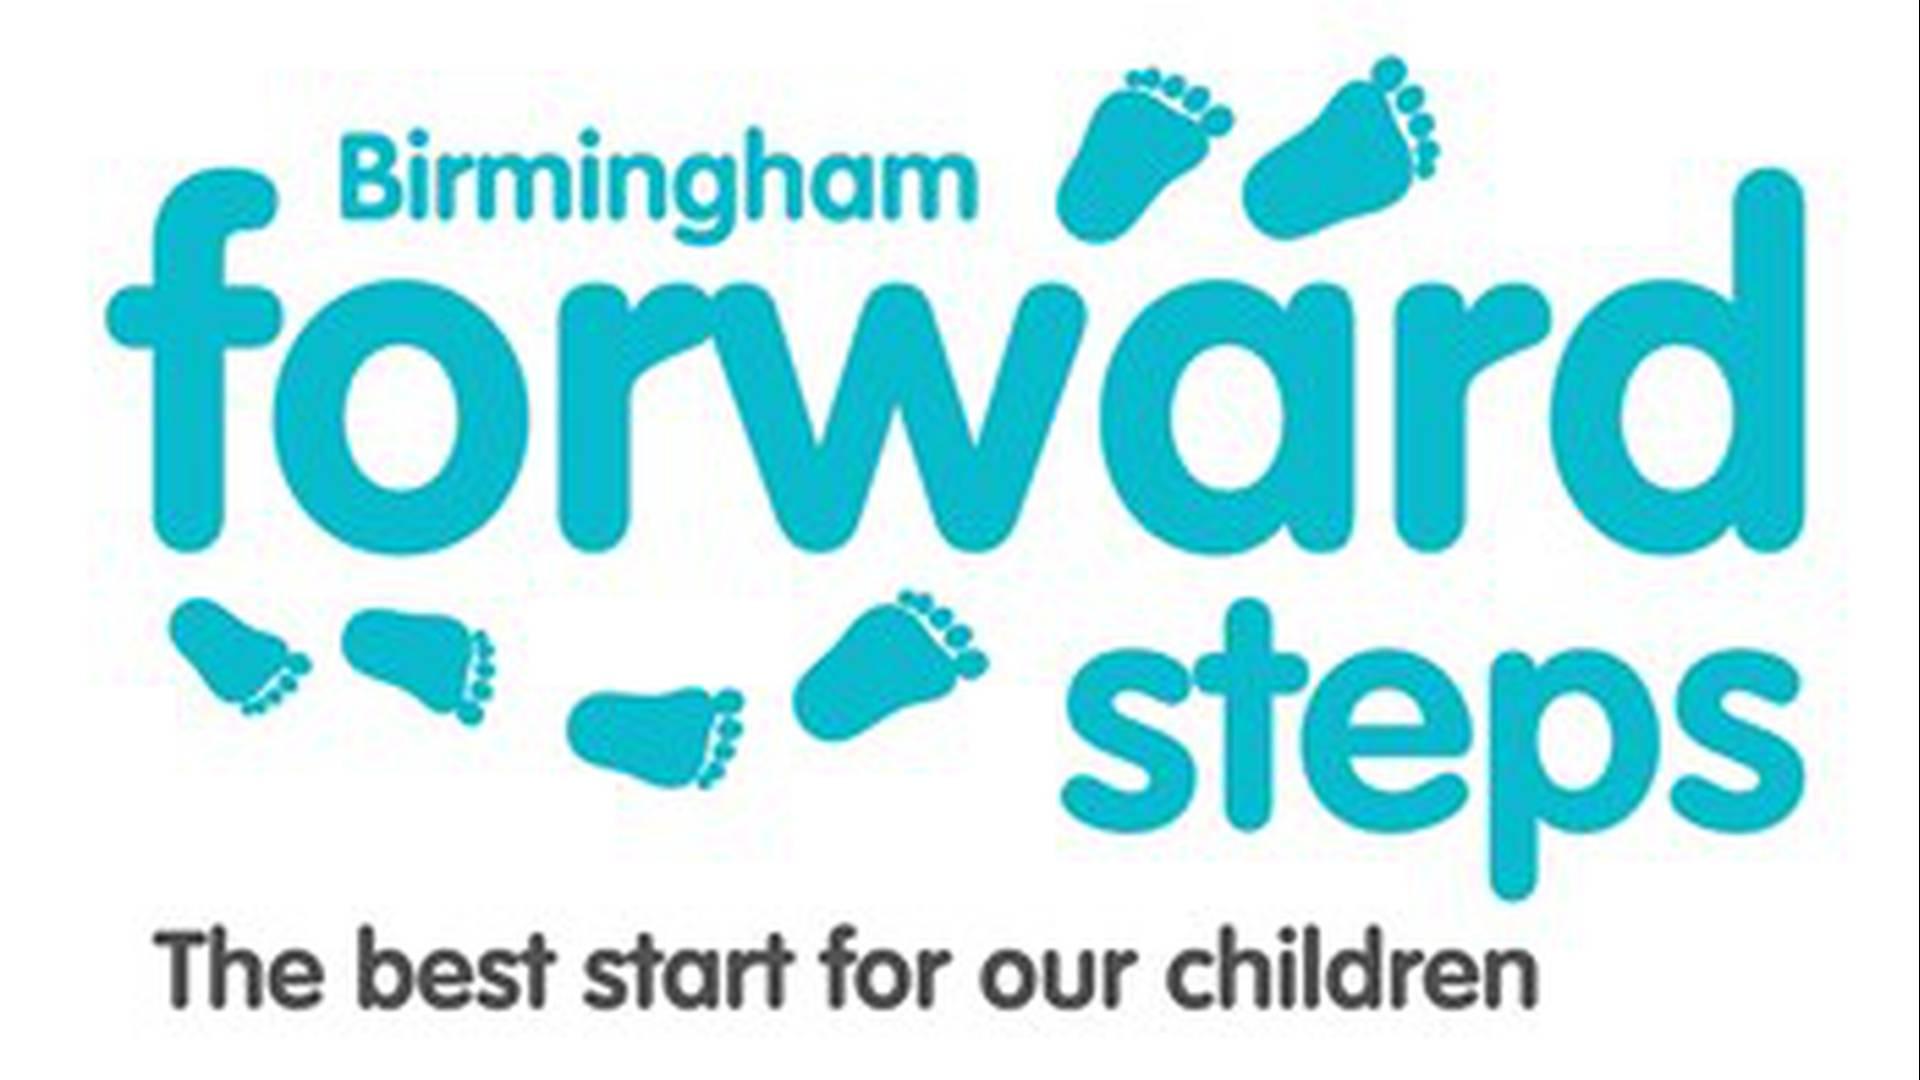 Birmingham forward steps photo